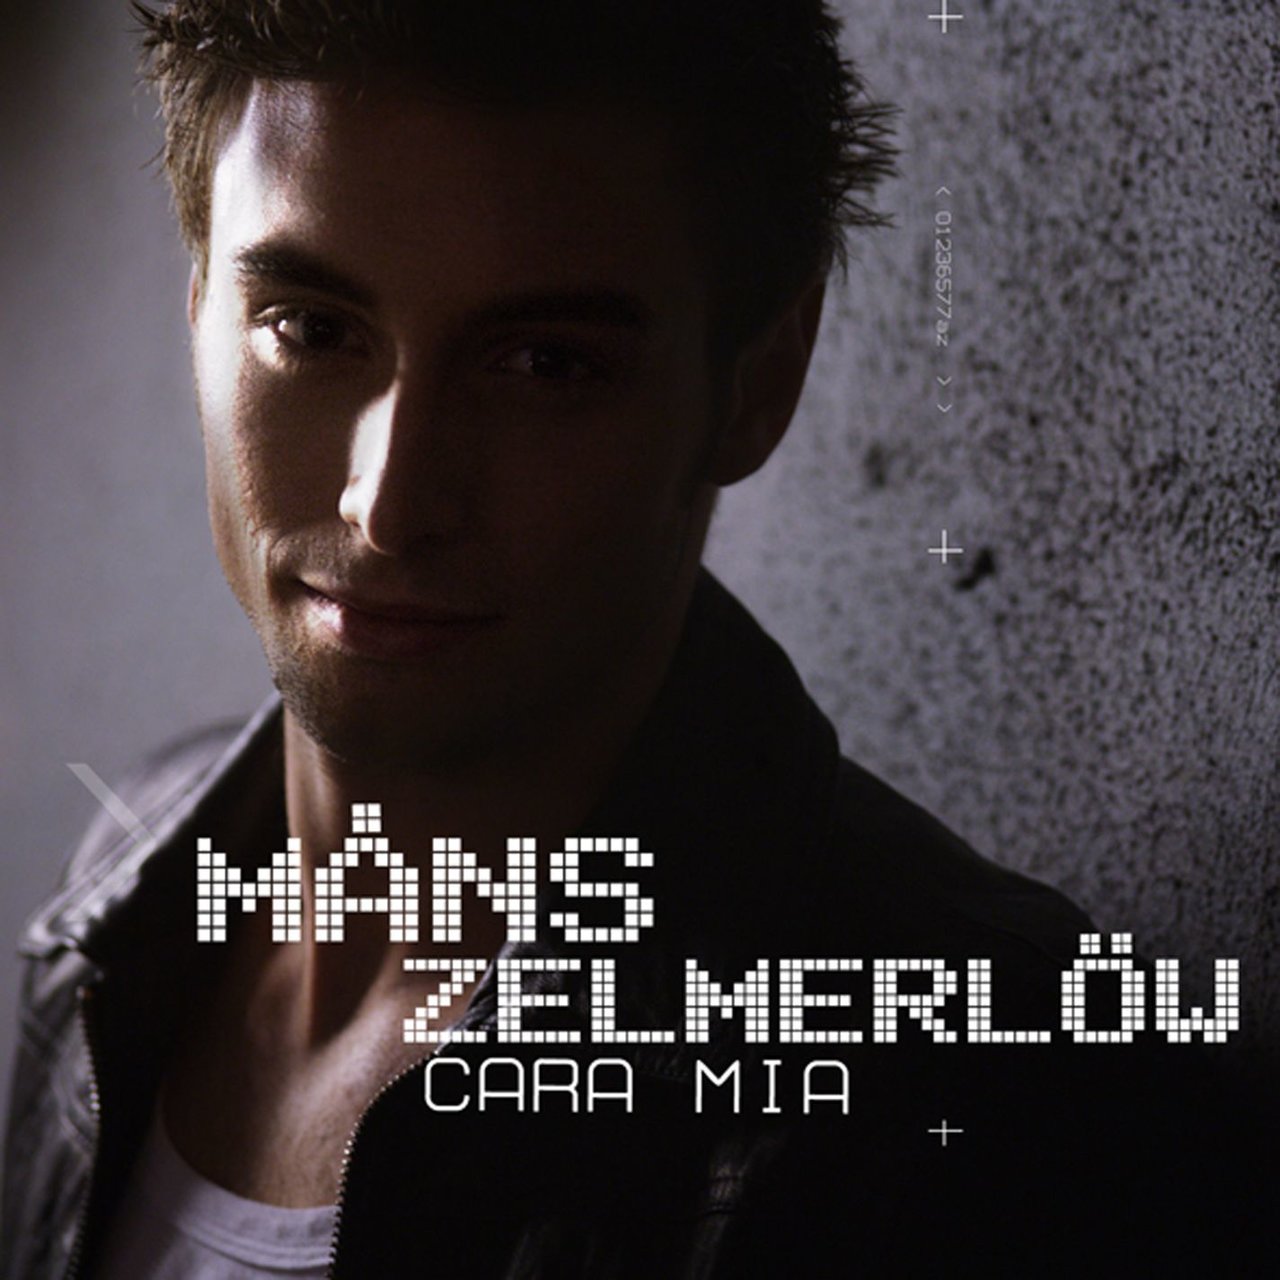 Måns Zelmerlöw — Cara mia cover artwork